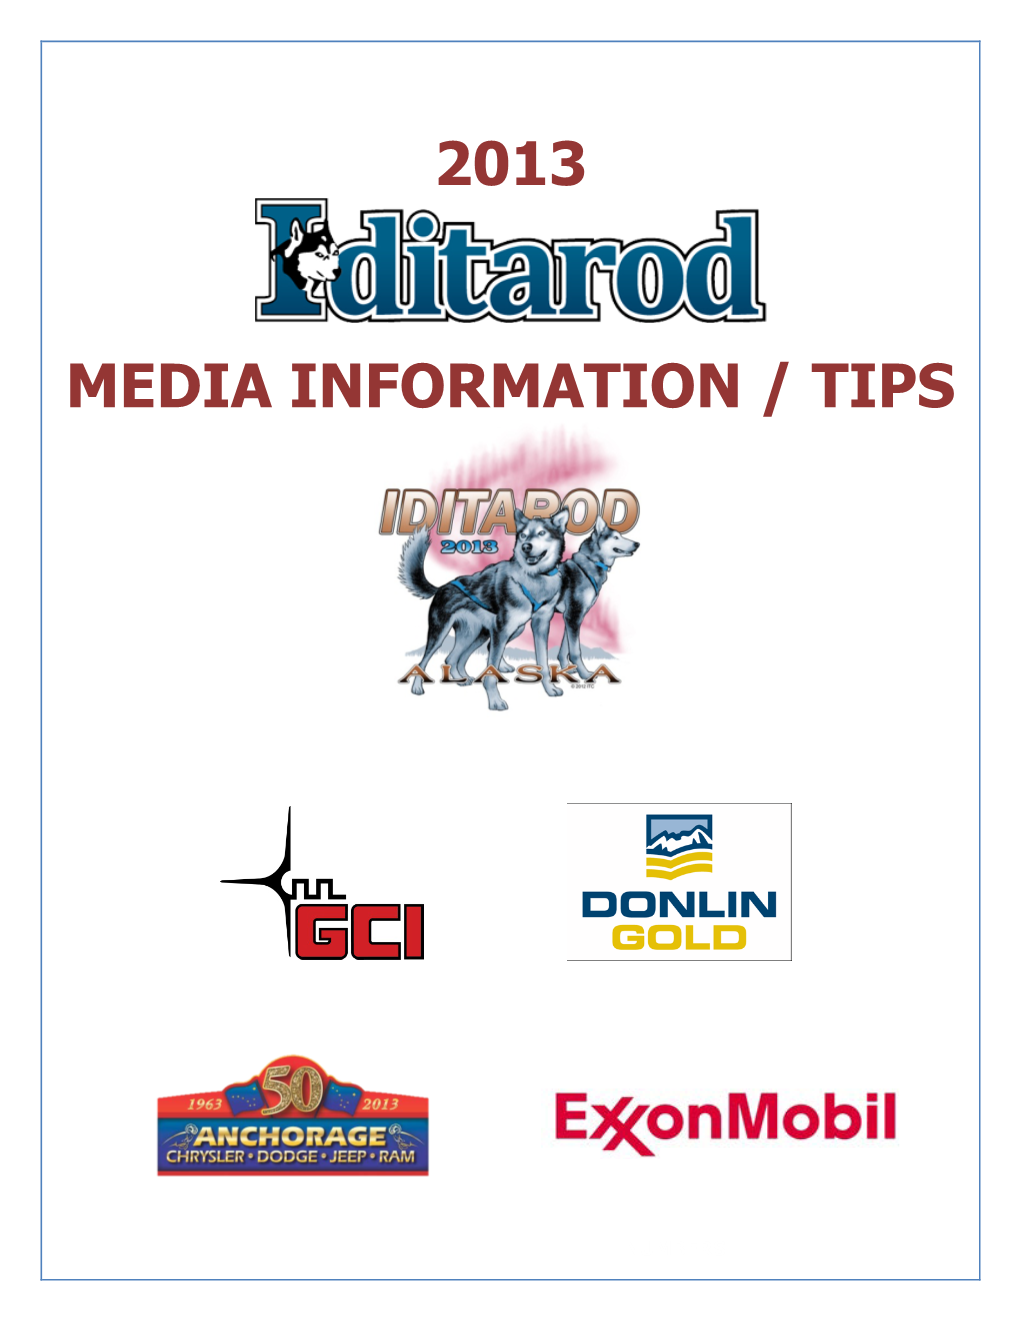 Iditarod Media Information / Tips 2013